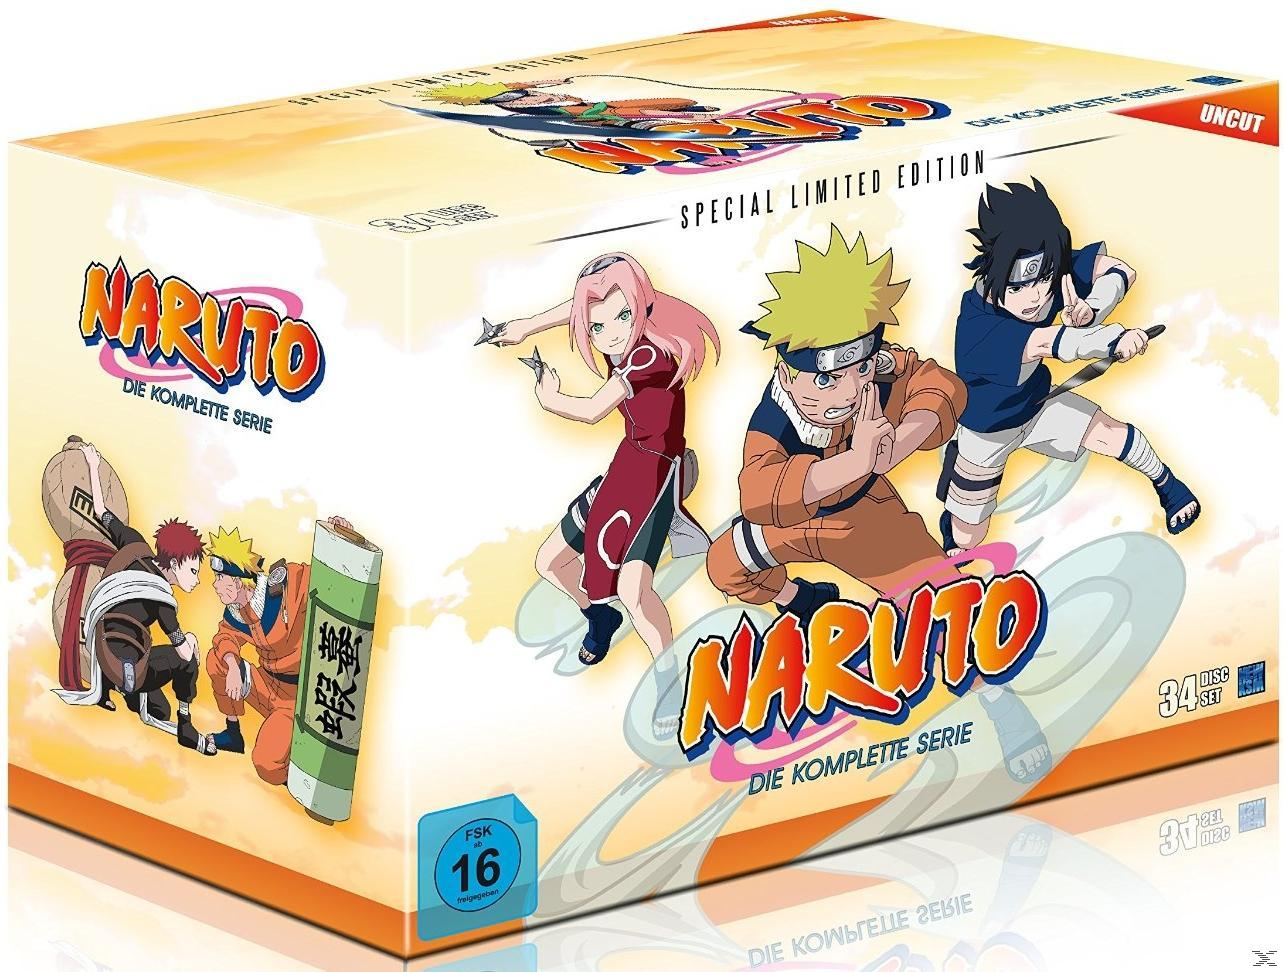 Naruto - Special Limited Edition DVD (Gesamtedition)